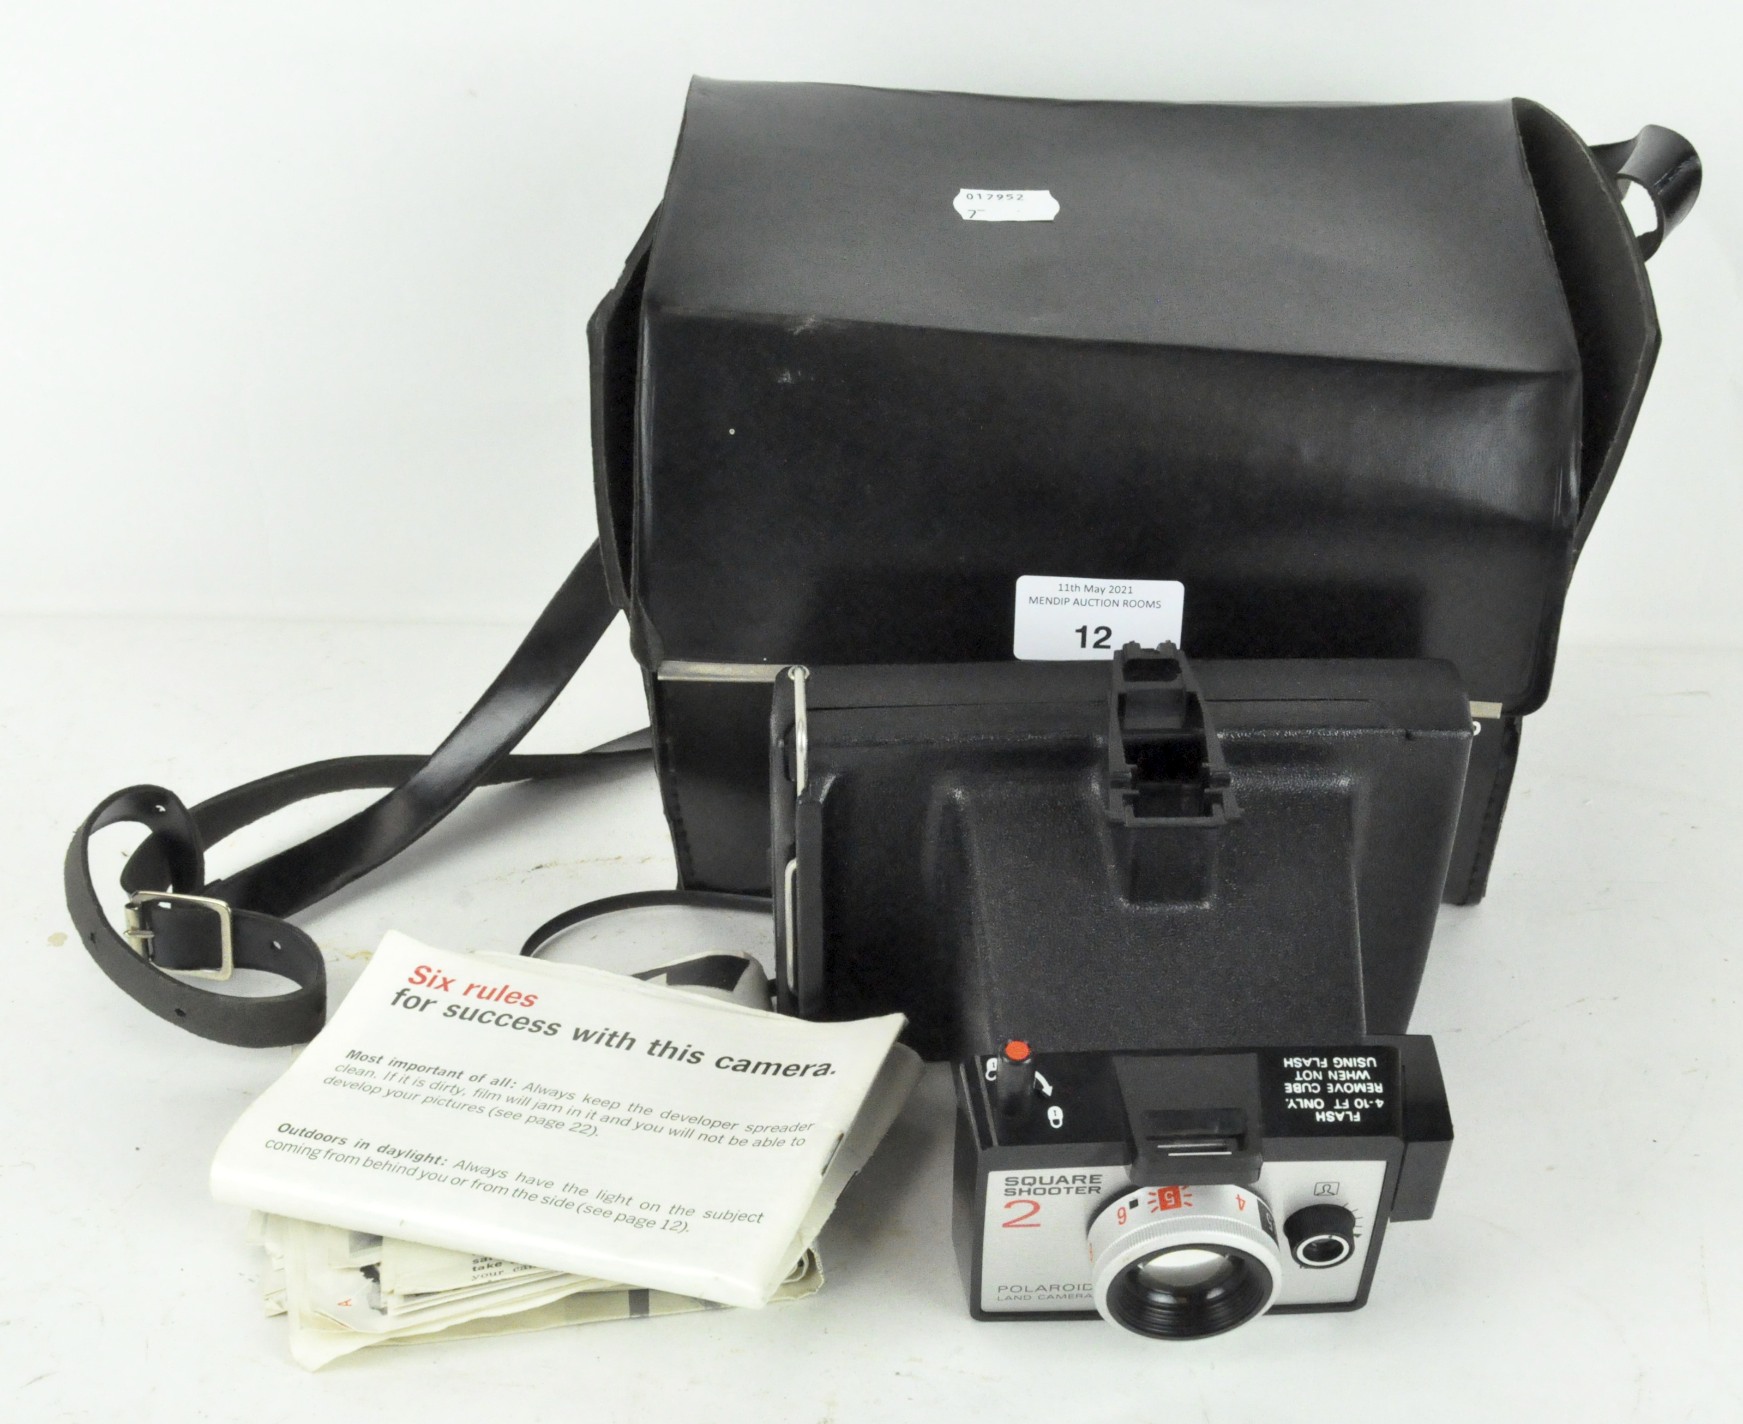 A Polaroid Square Shooter 2 Land camera,